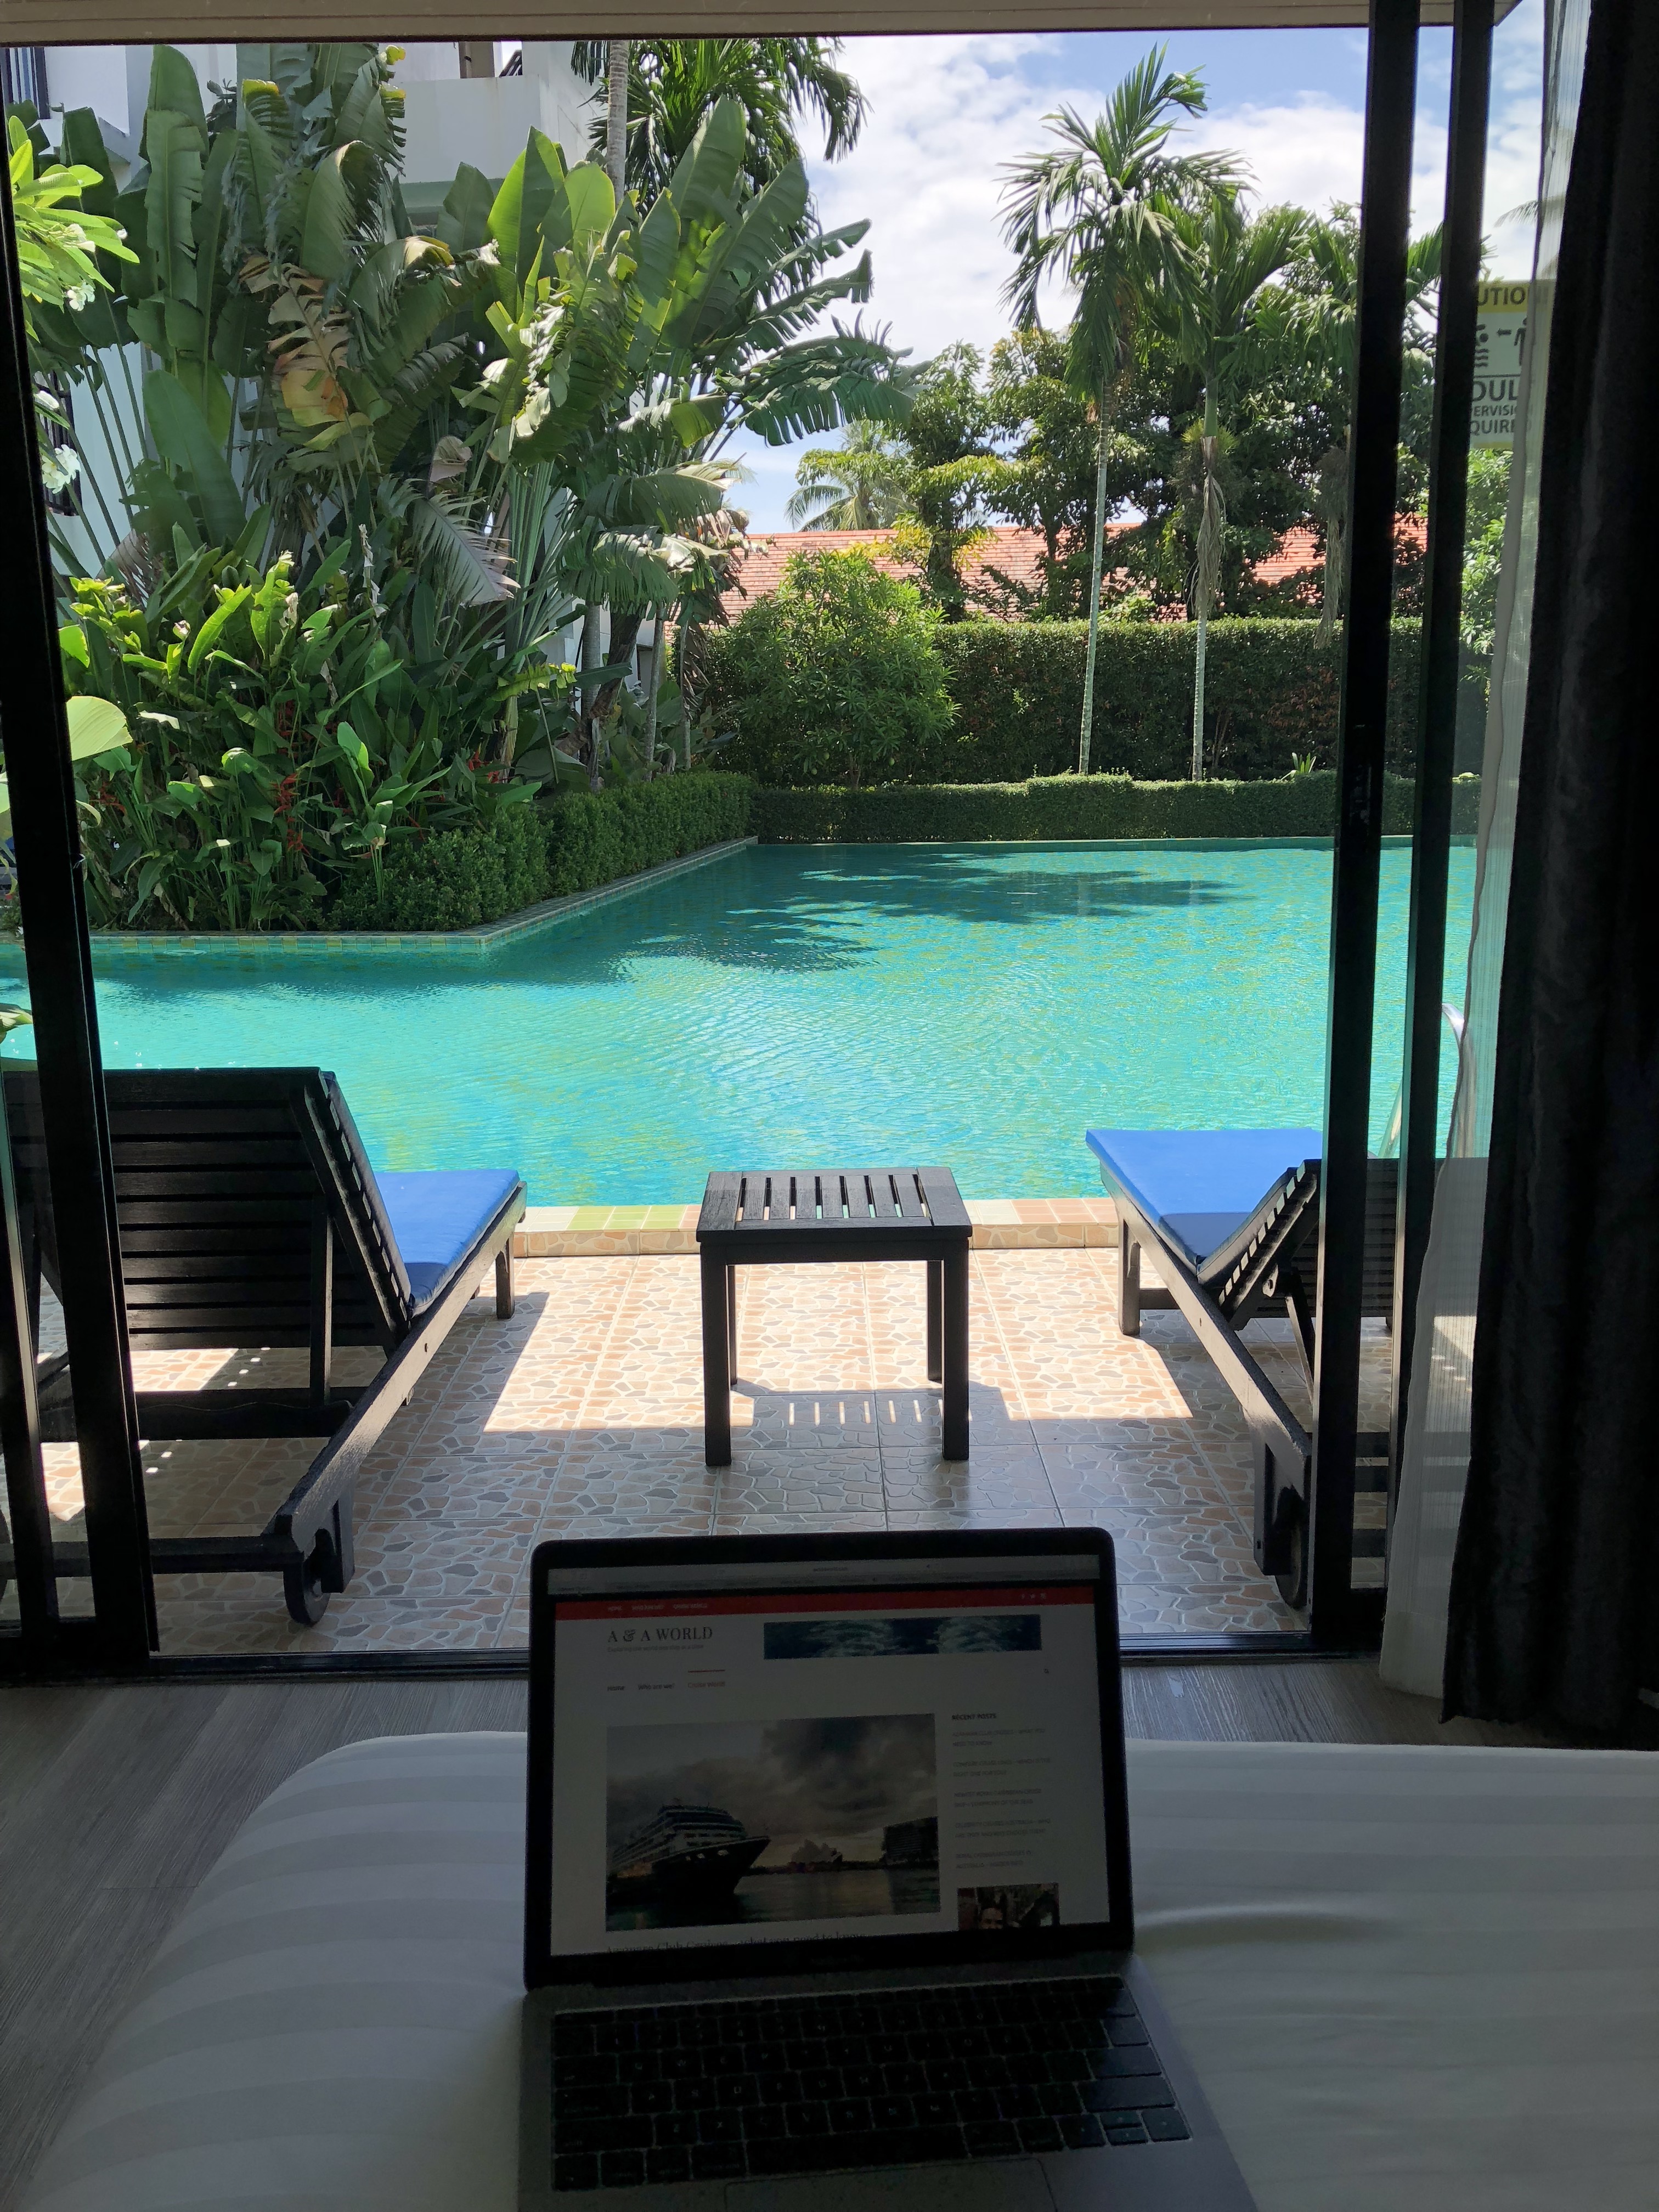 Phuket Hotels Reviews – D’Varee Mai Khao Beach